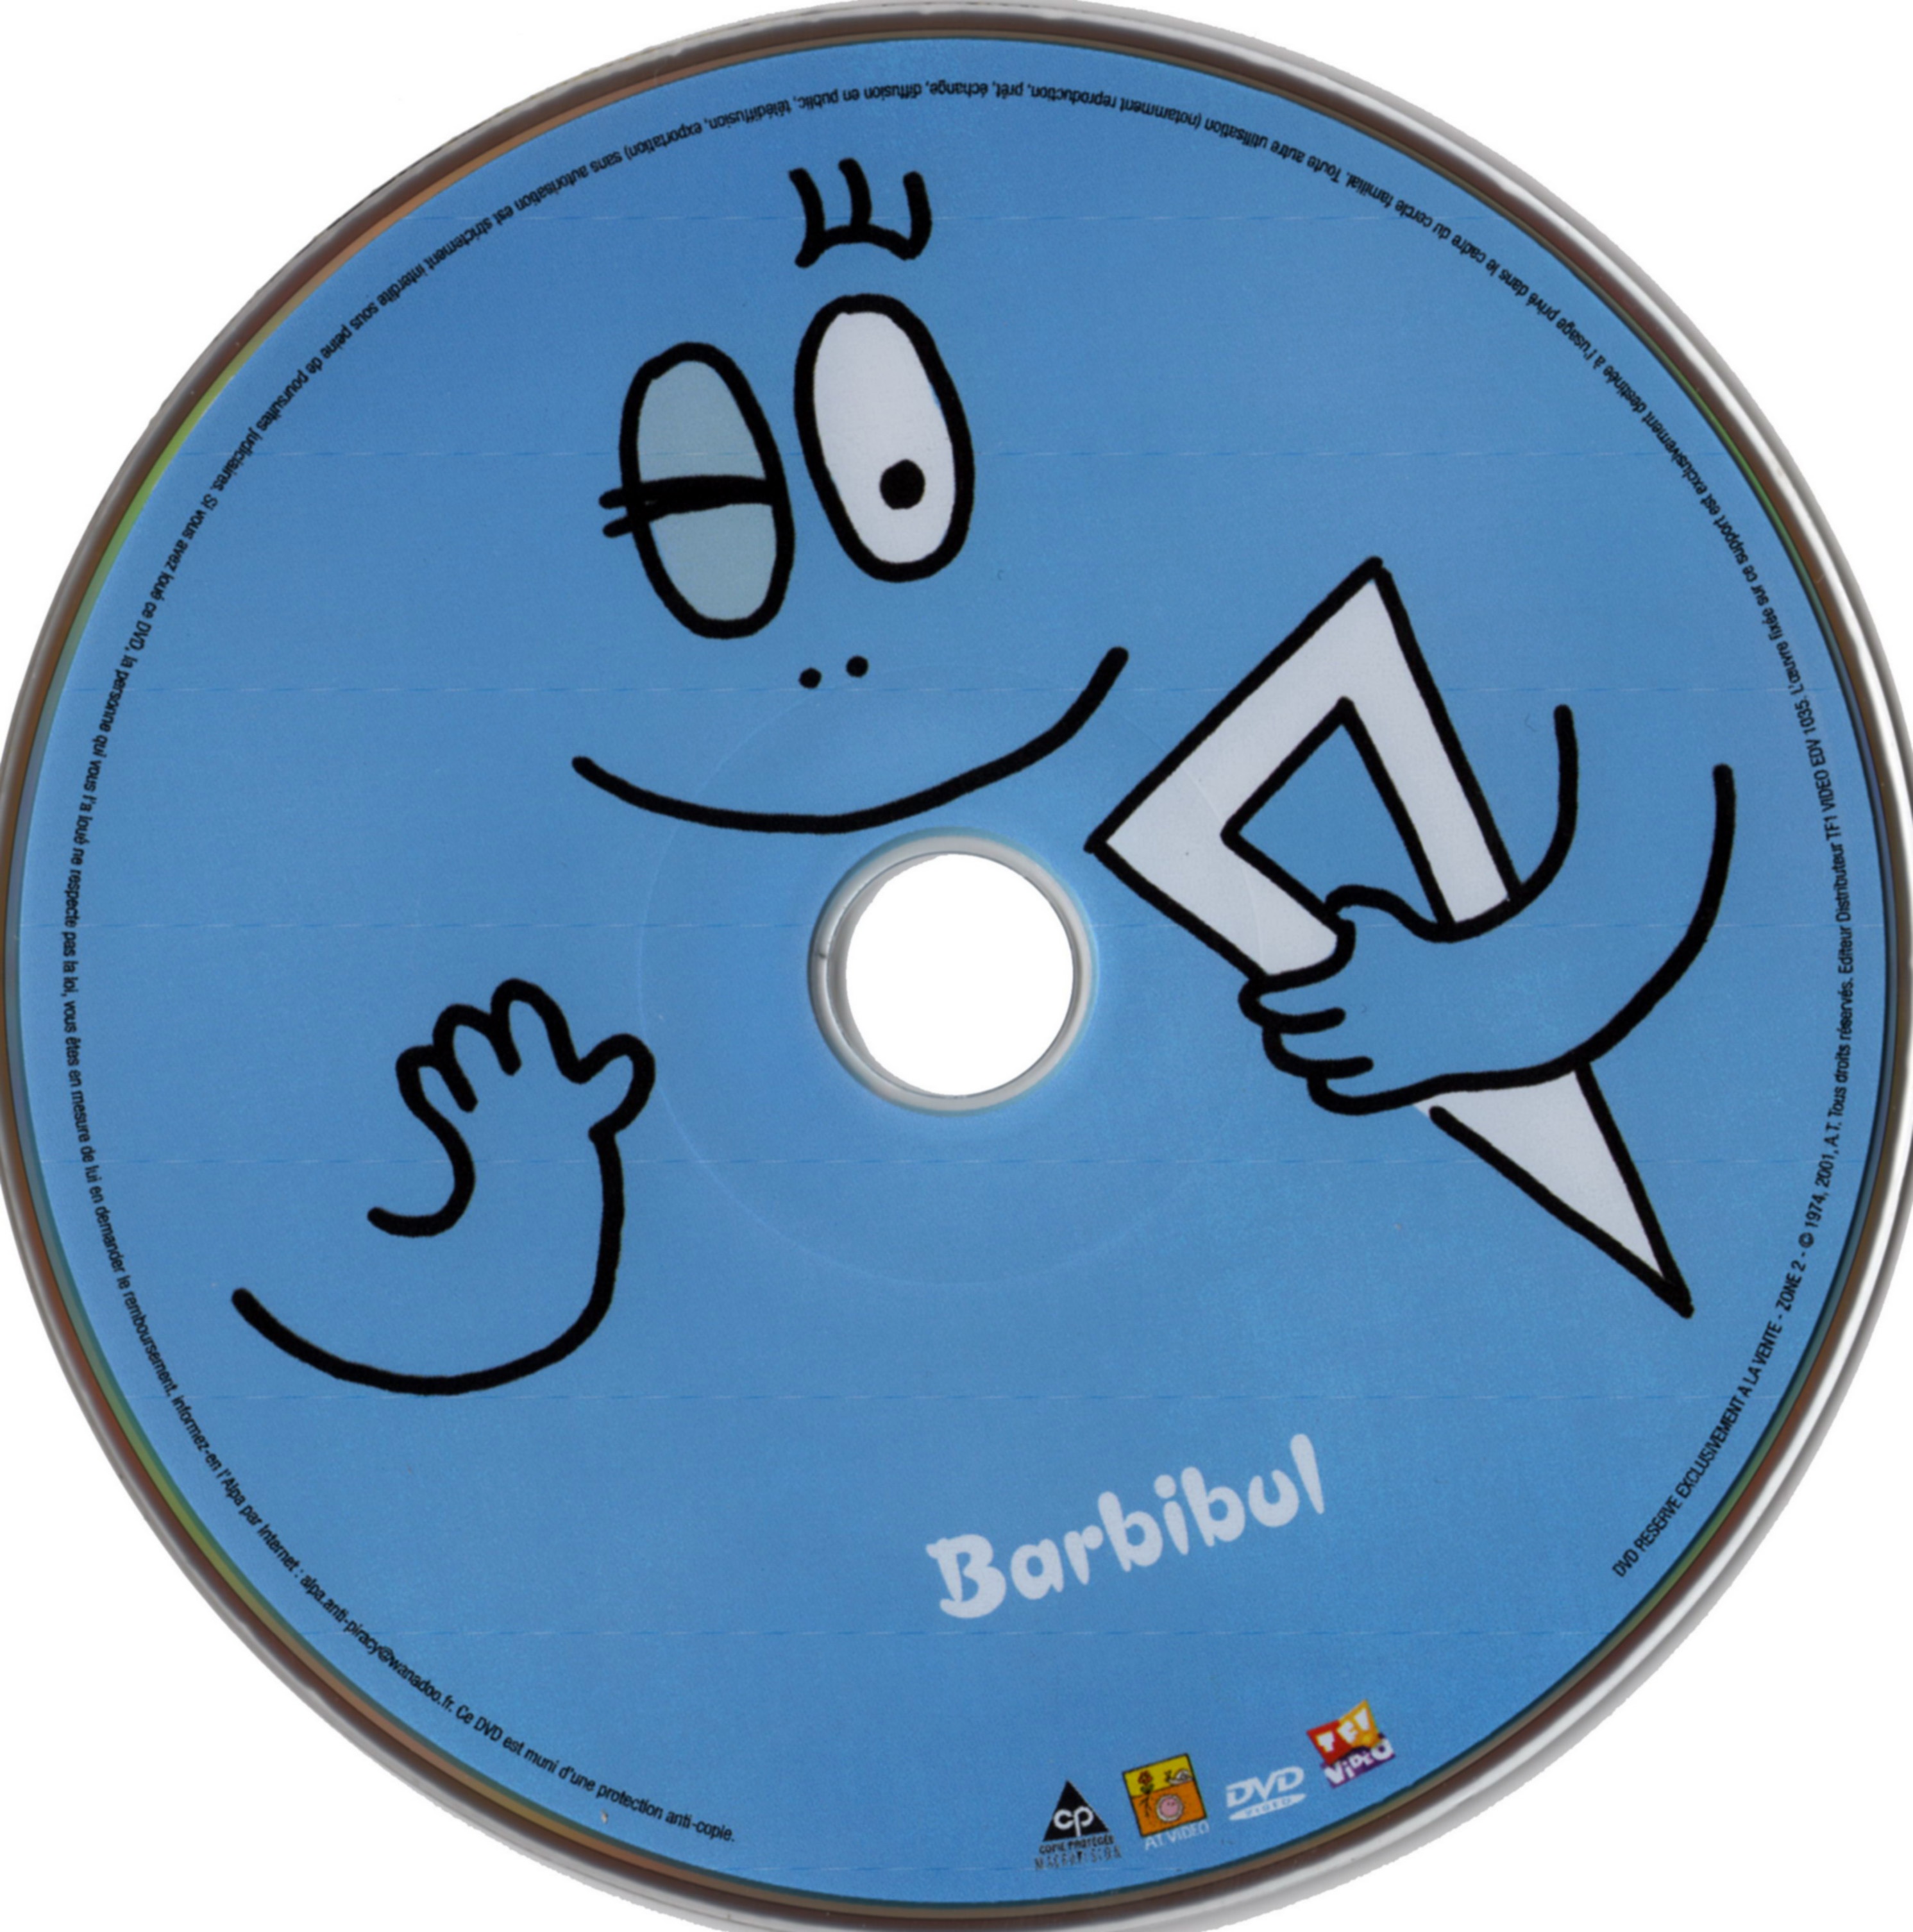 Barbibul